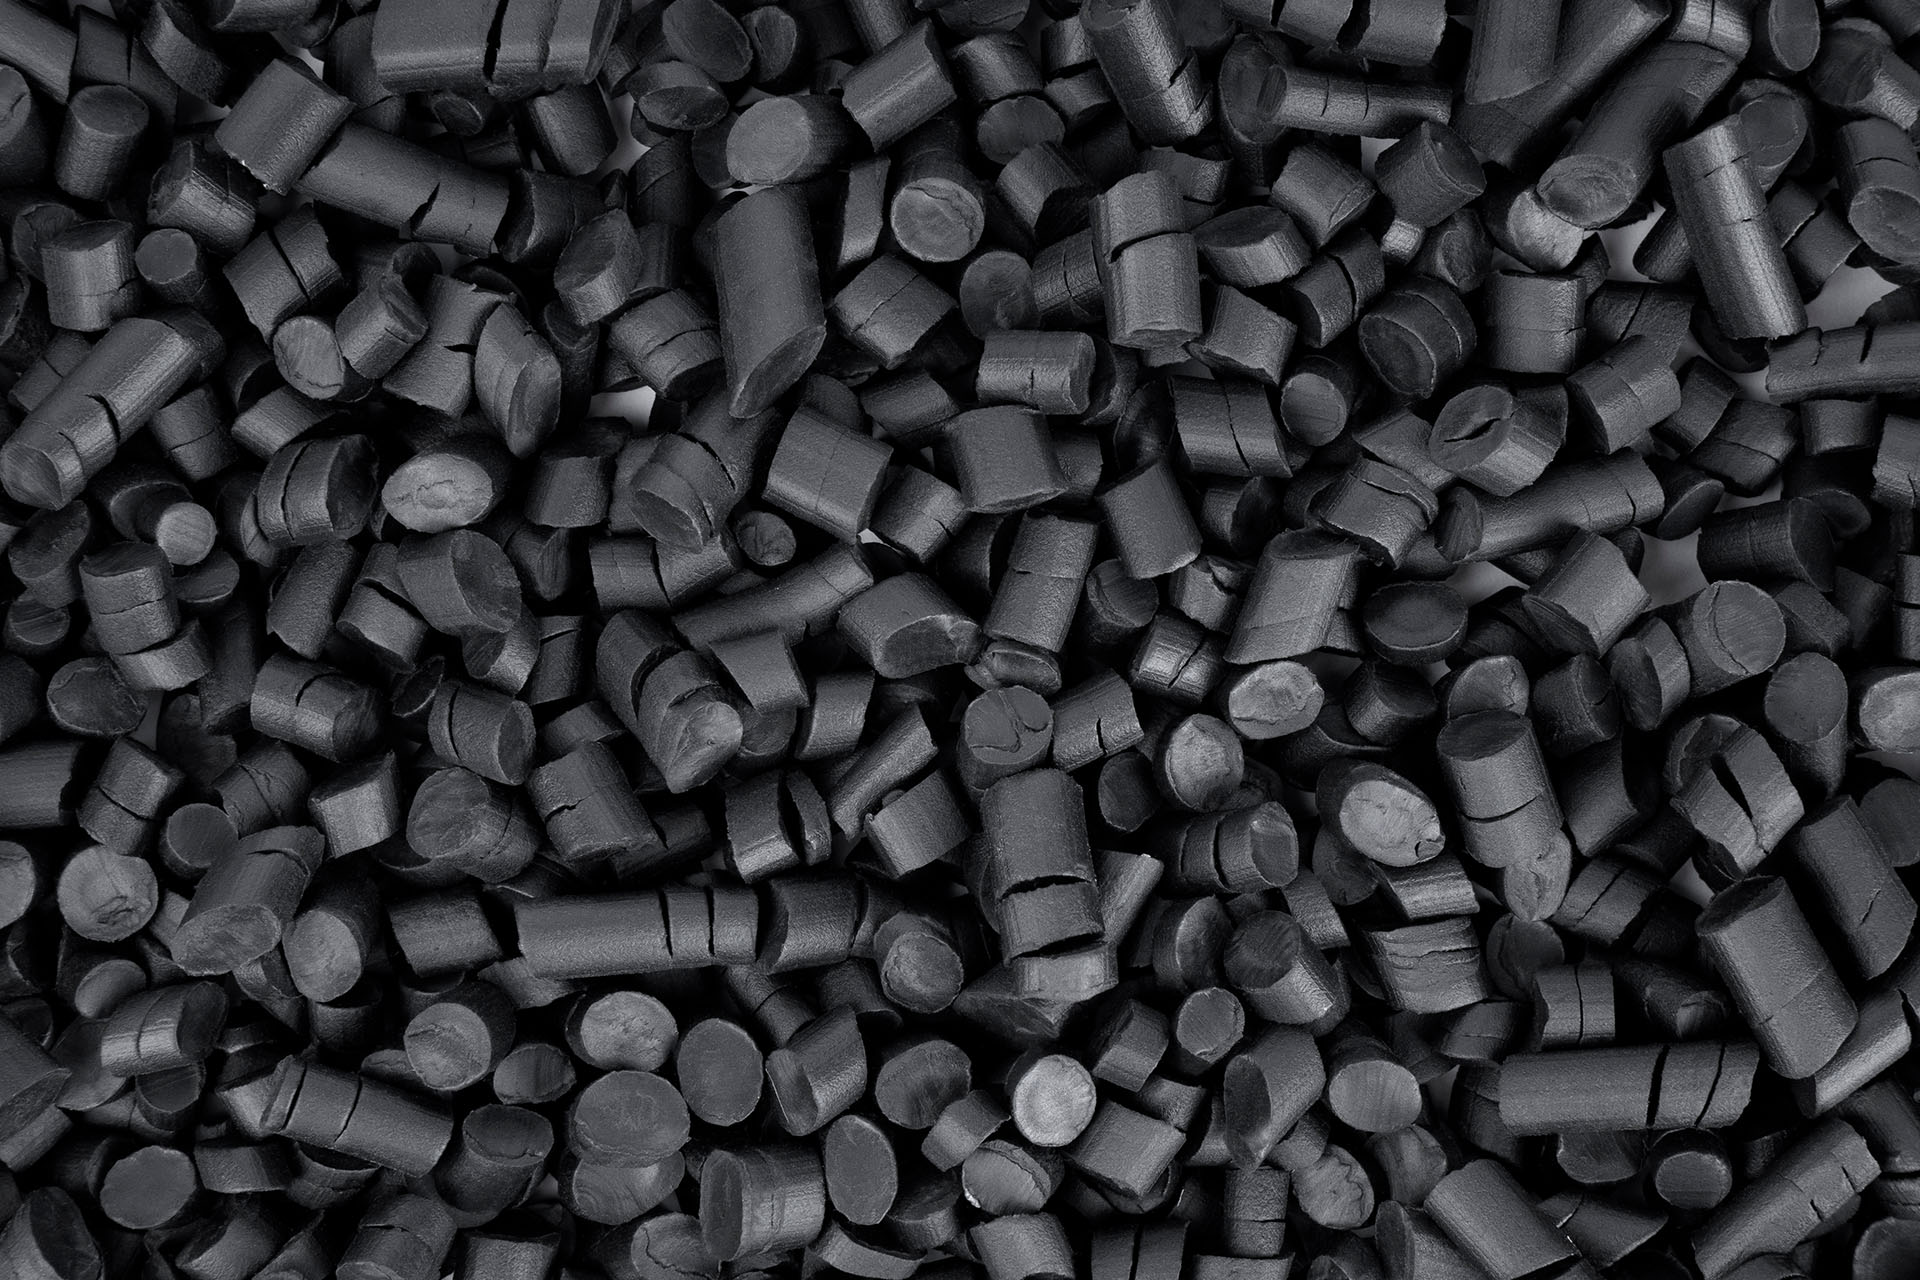 Black plastic pellets